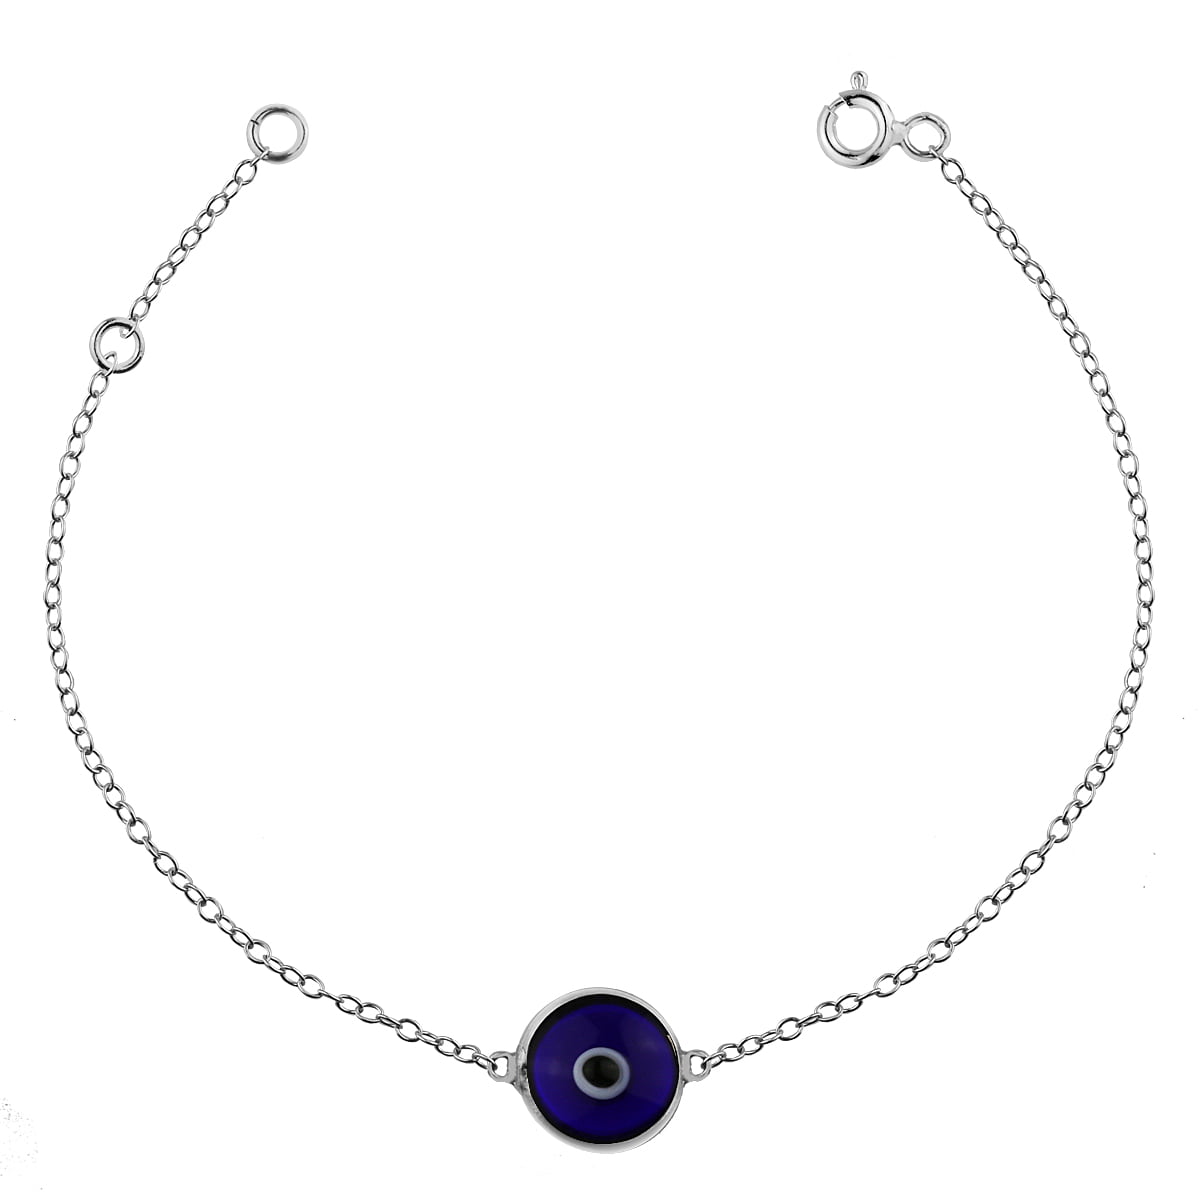 Bracelet handmade of silver 925 with blue glass eye